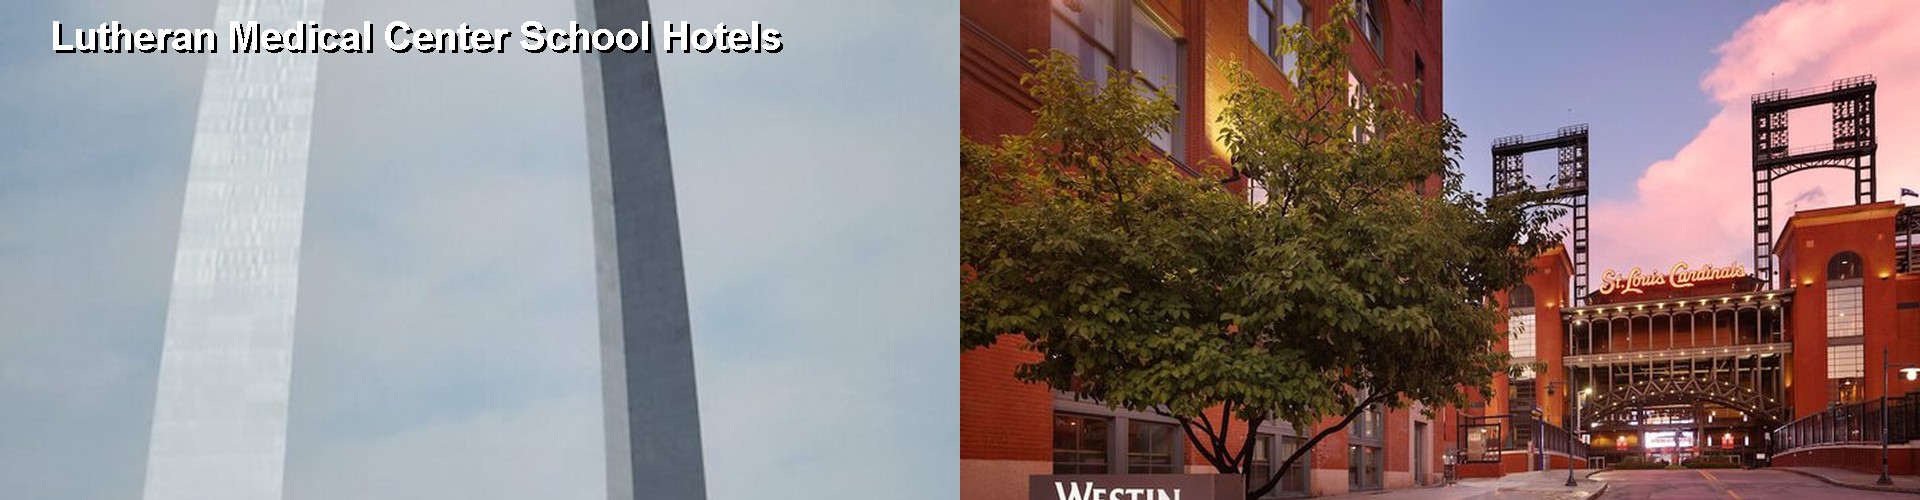 5 Best Hotels near Lutheran Medical Center School